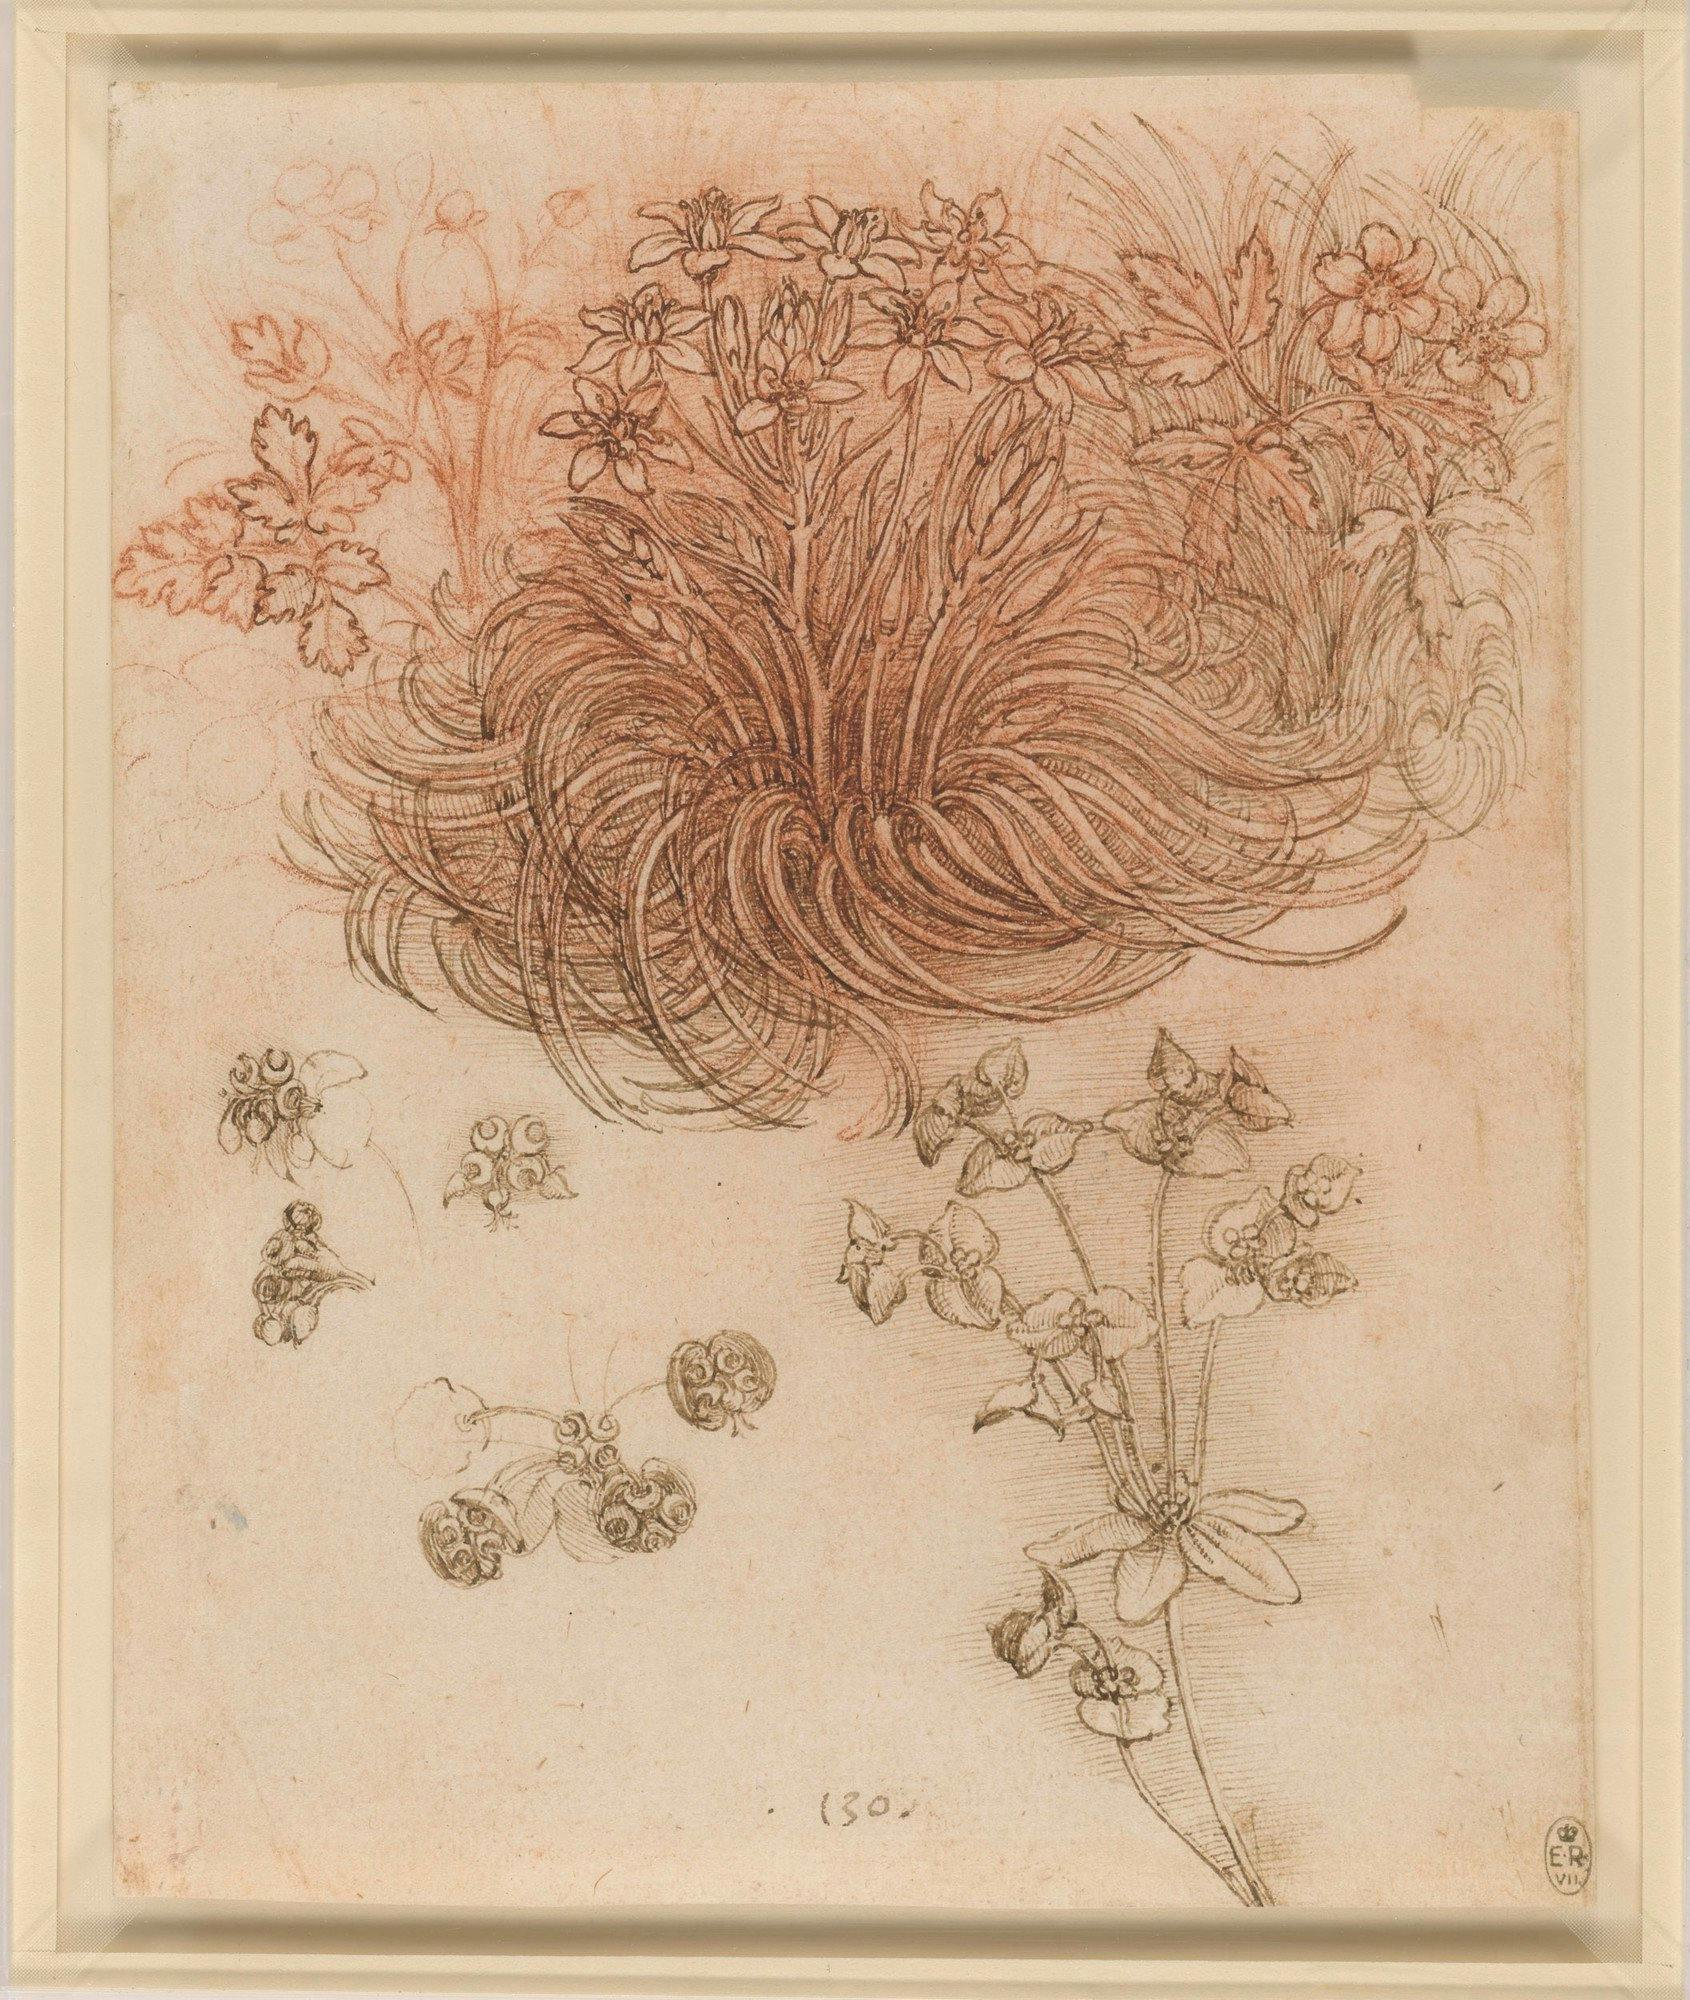 Leonardo Da Vinci, A star-of-Bethlehem and other plants c.1506-12, Red chalk, pen and ink | 19.8 x 16.0 cm (sheet of paper) | RCIN 912424